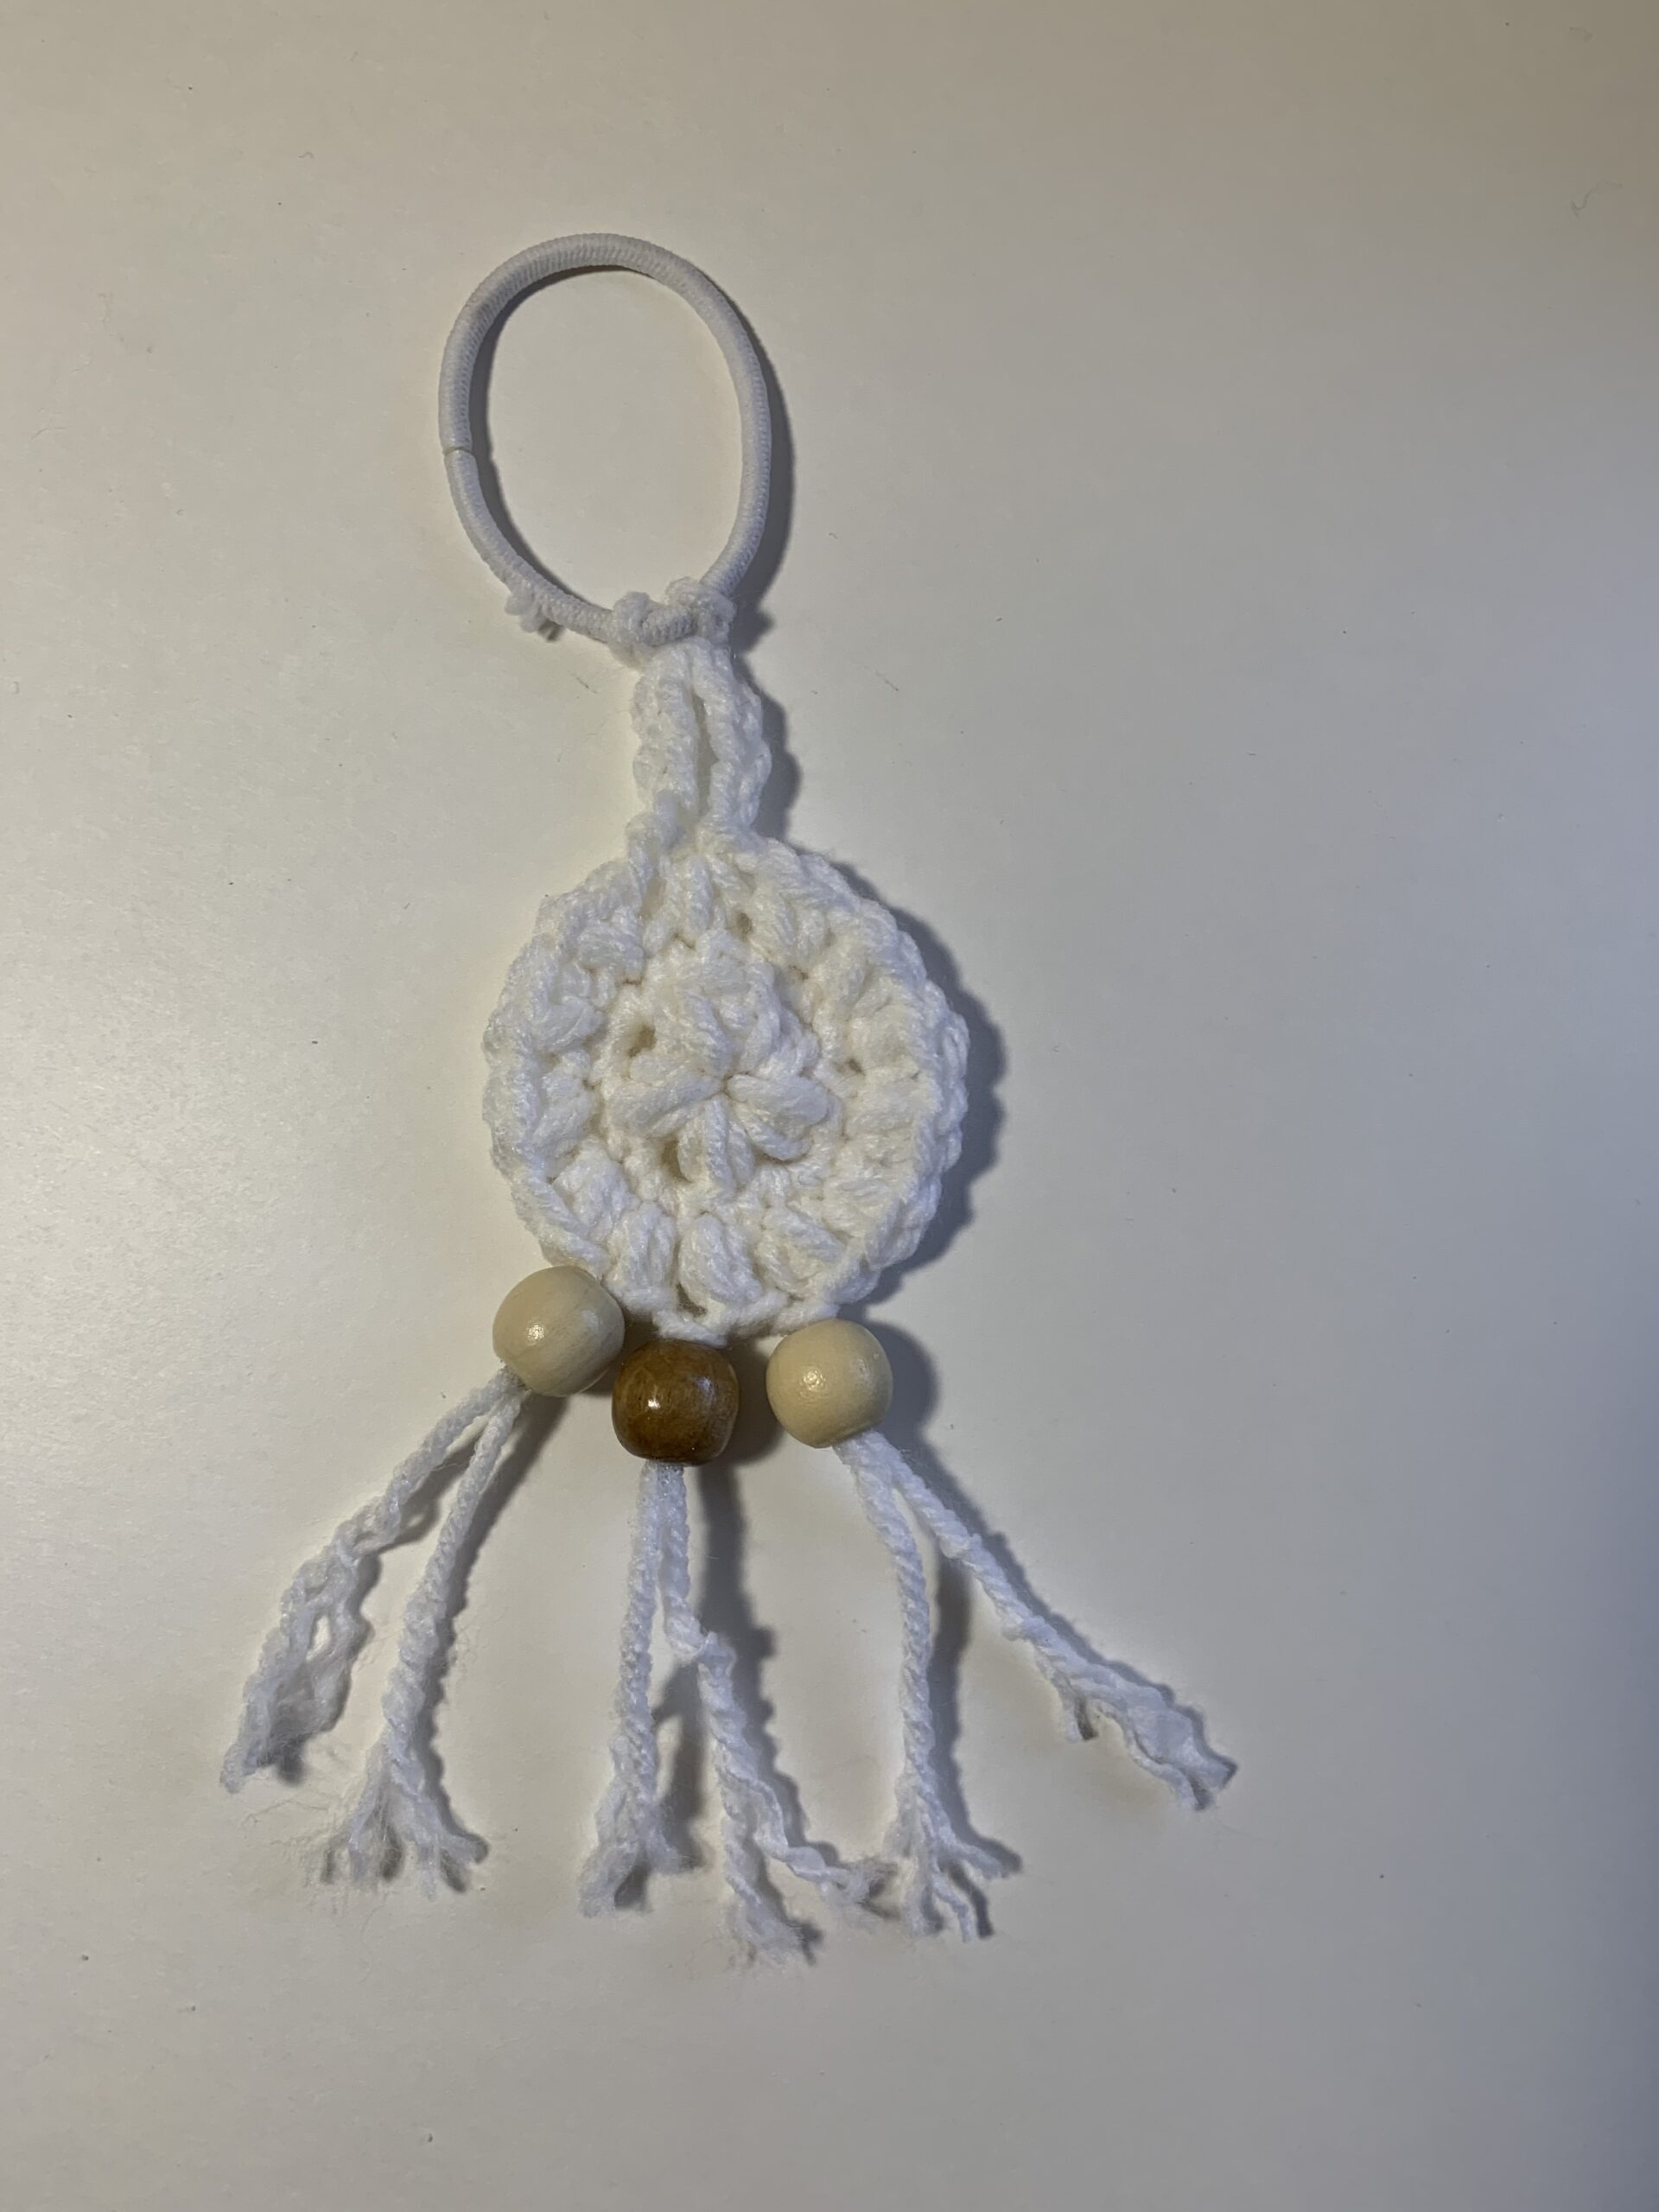 Mini dream catcher crochet pattern (keychain size)